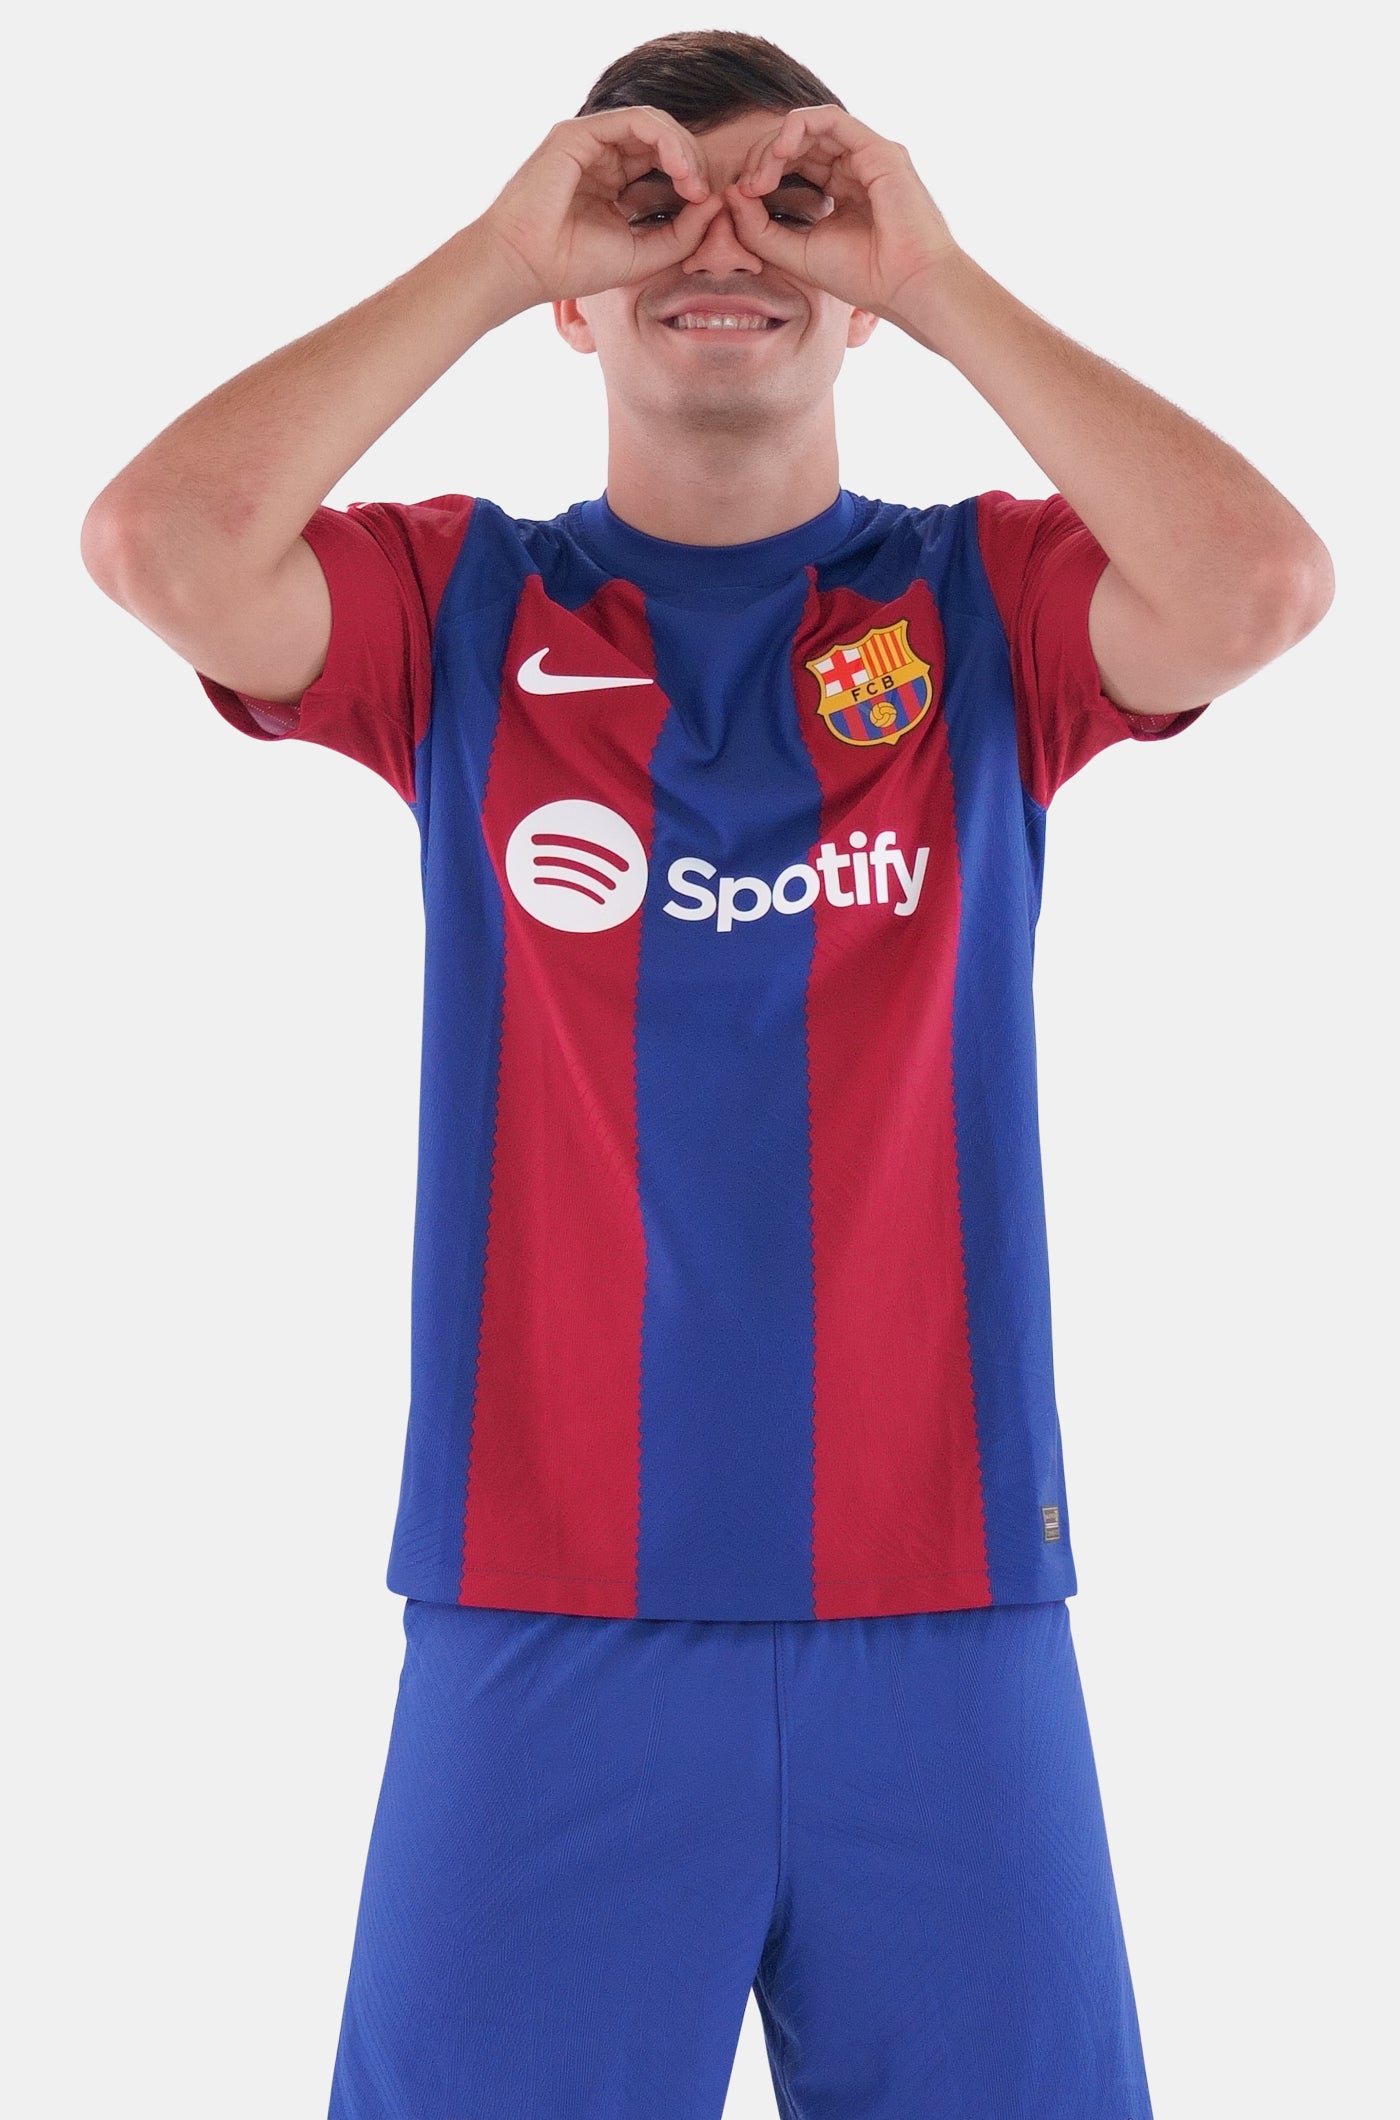 UCL FC Barcelona home shirt 23/24 Player's Edition  - PEDRI